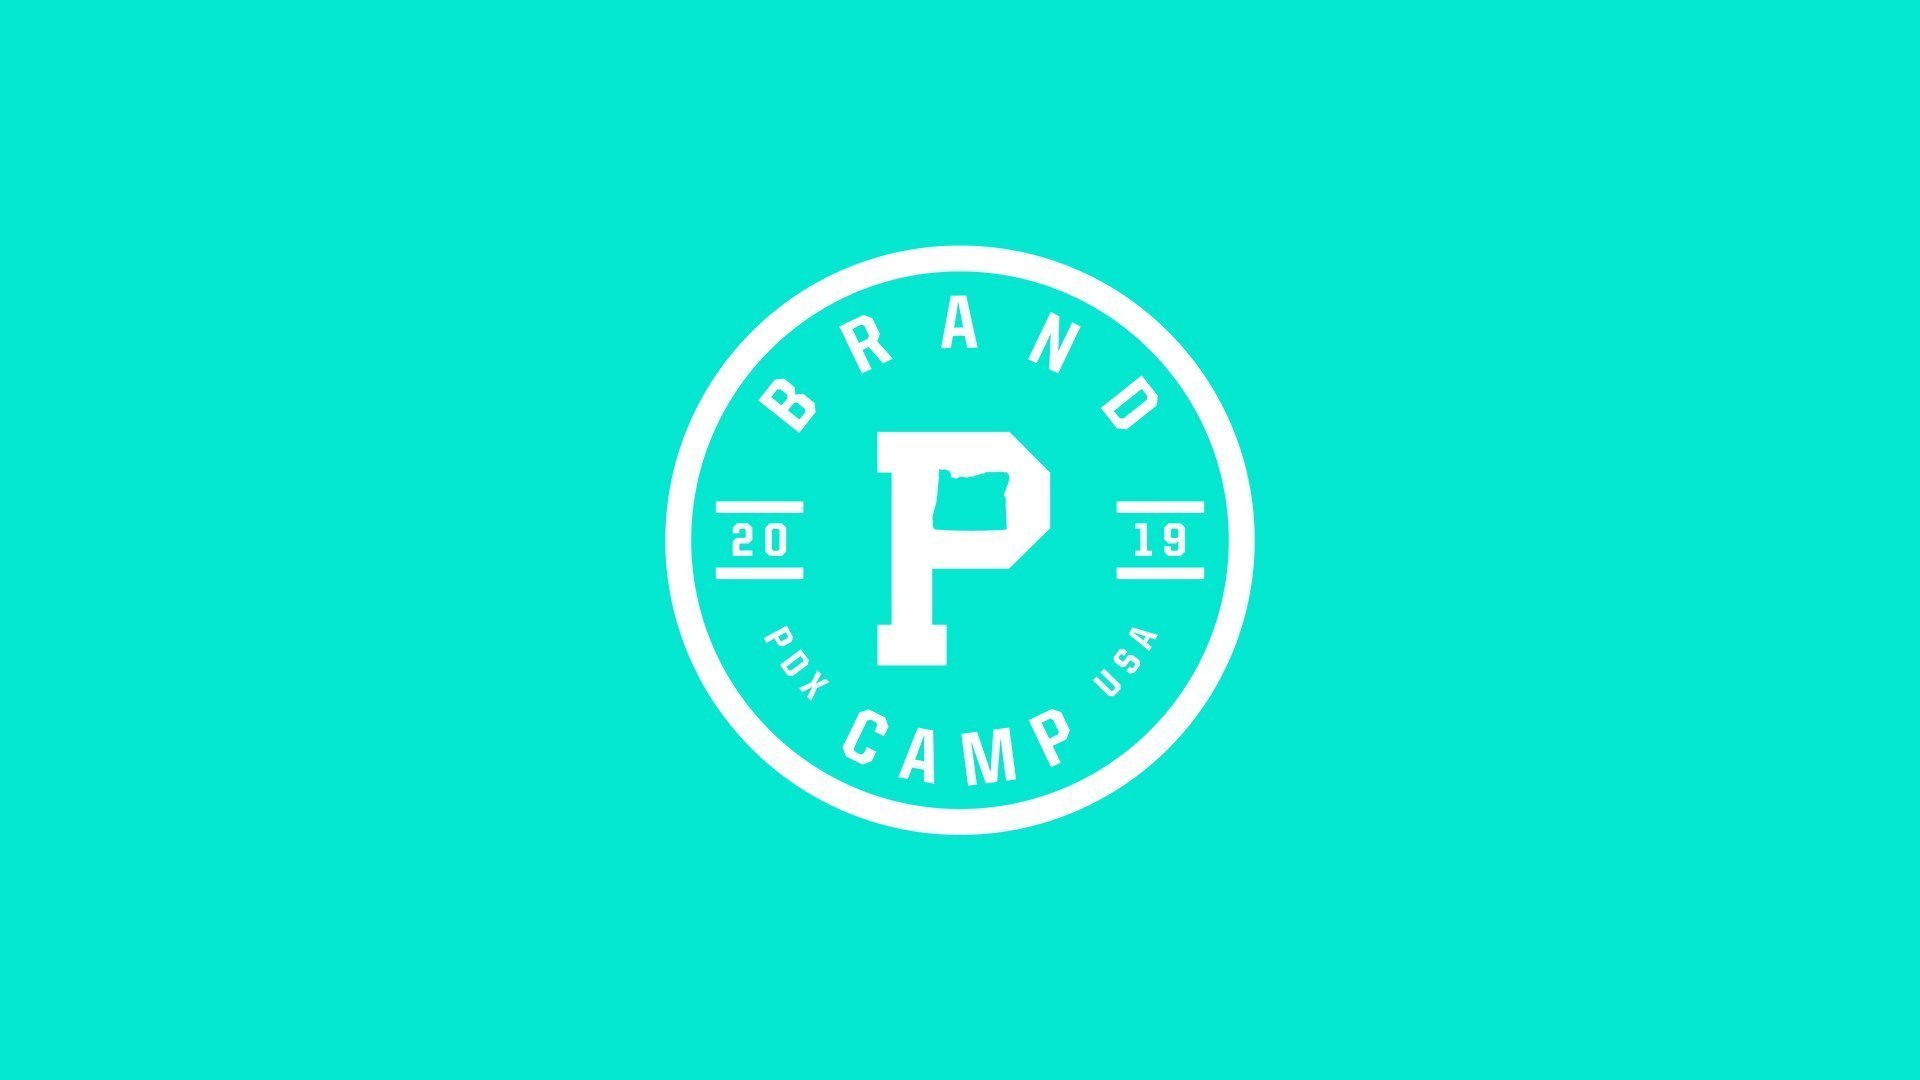 Brand Camp 2019 | Week One - Portland Gear